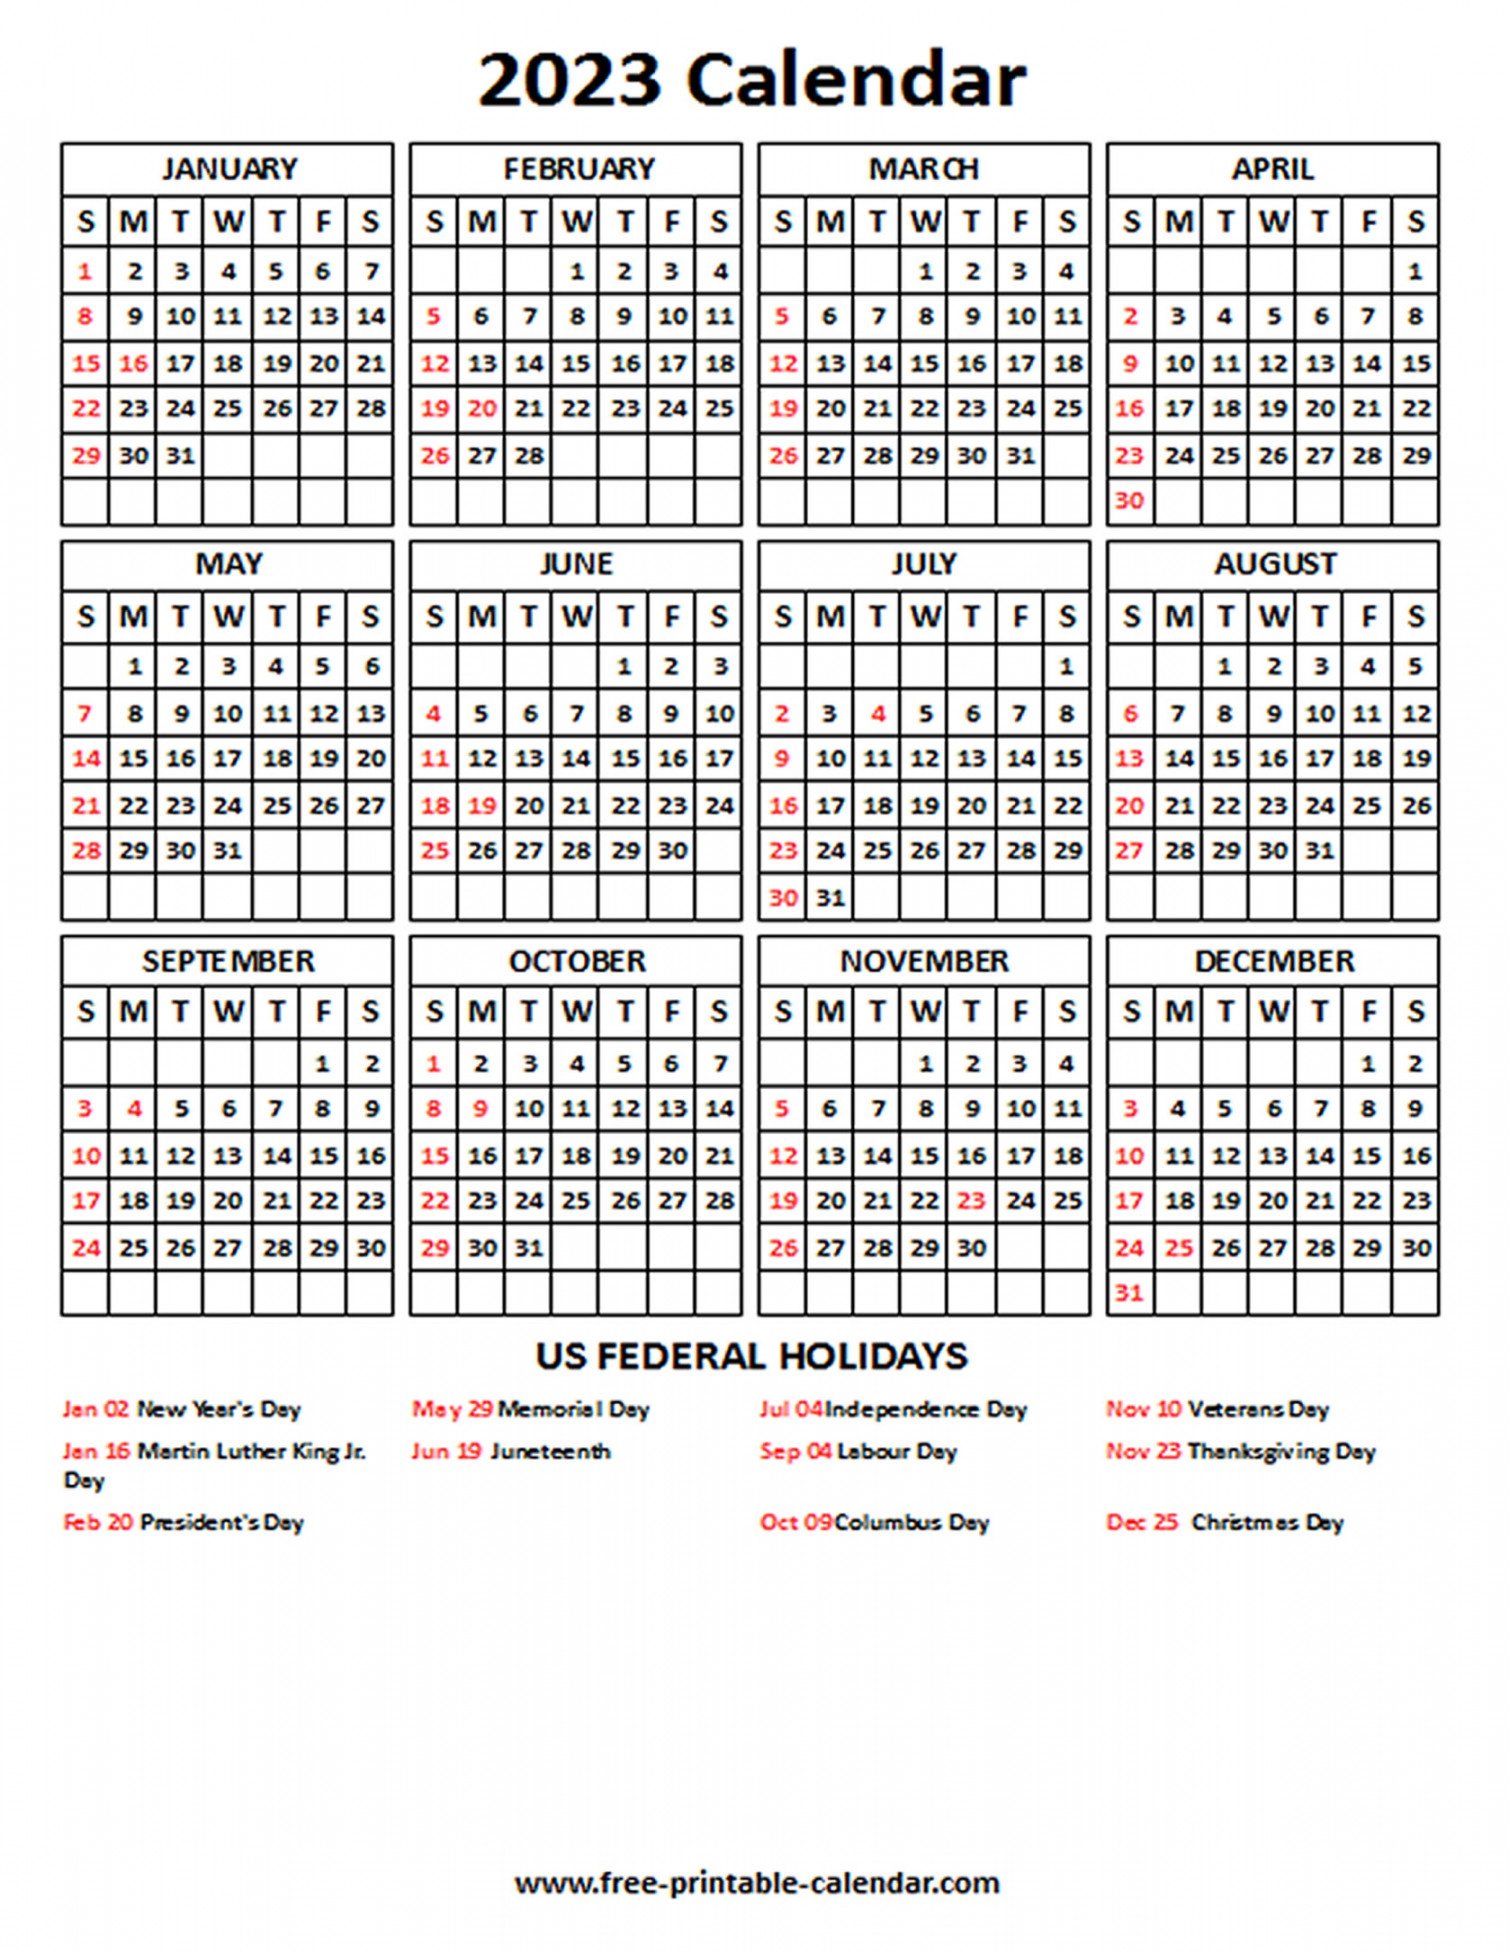 Calendar With US Holidays - Free-printable-calendar